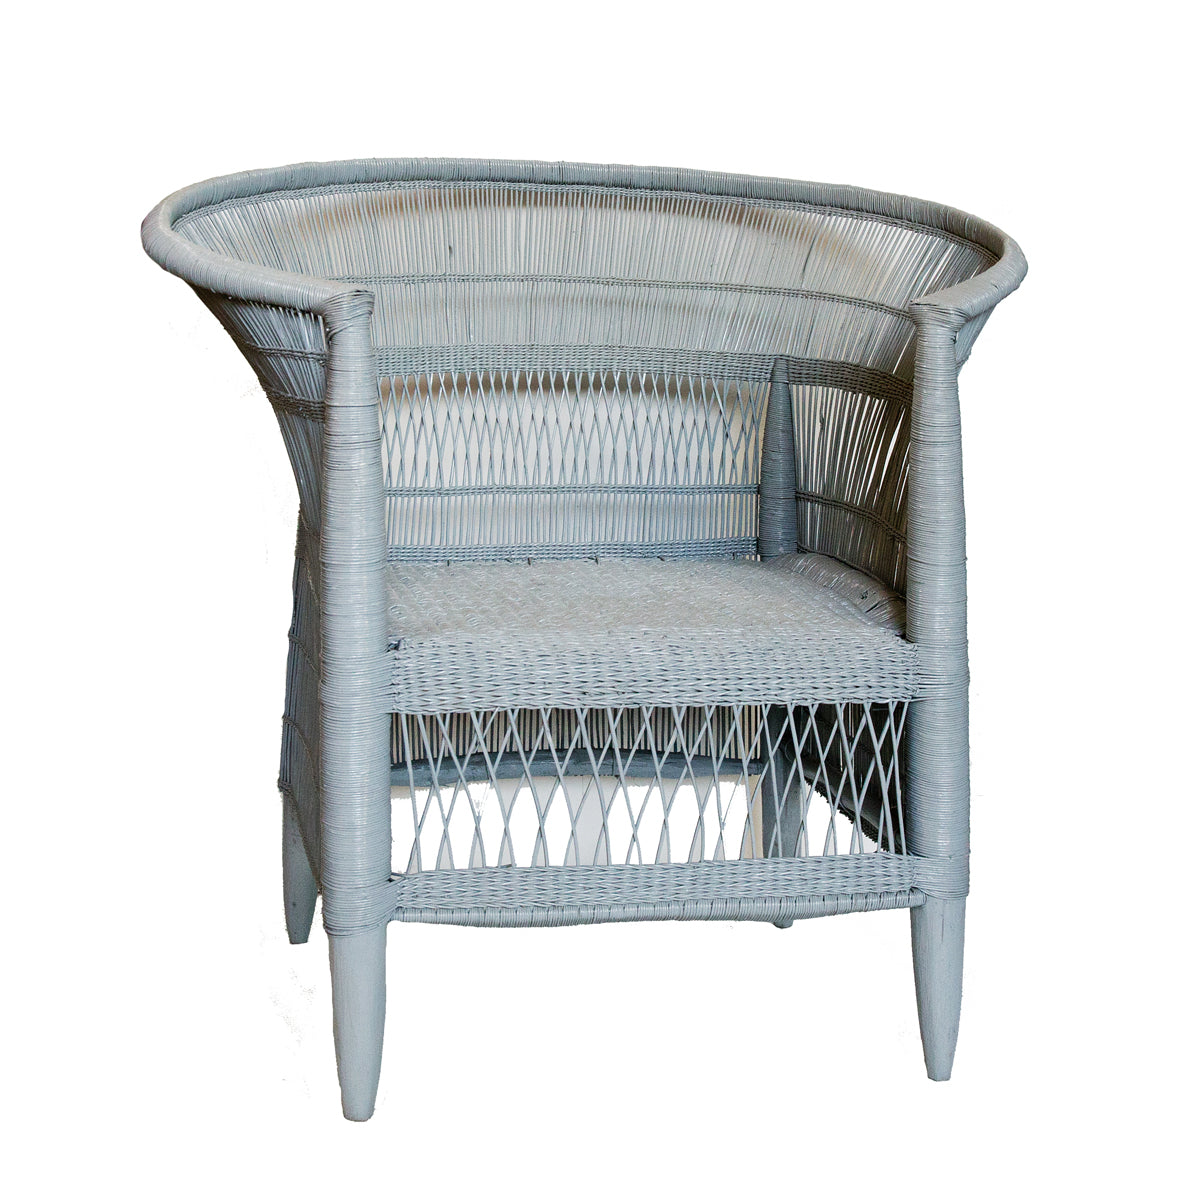 Malawi Chair - Blue